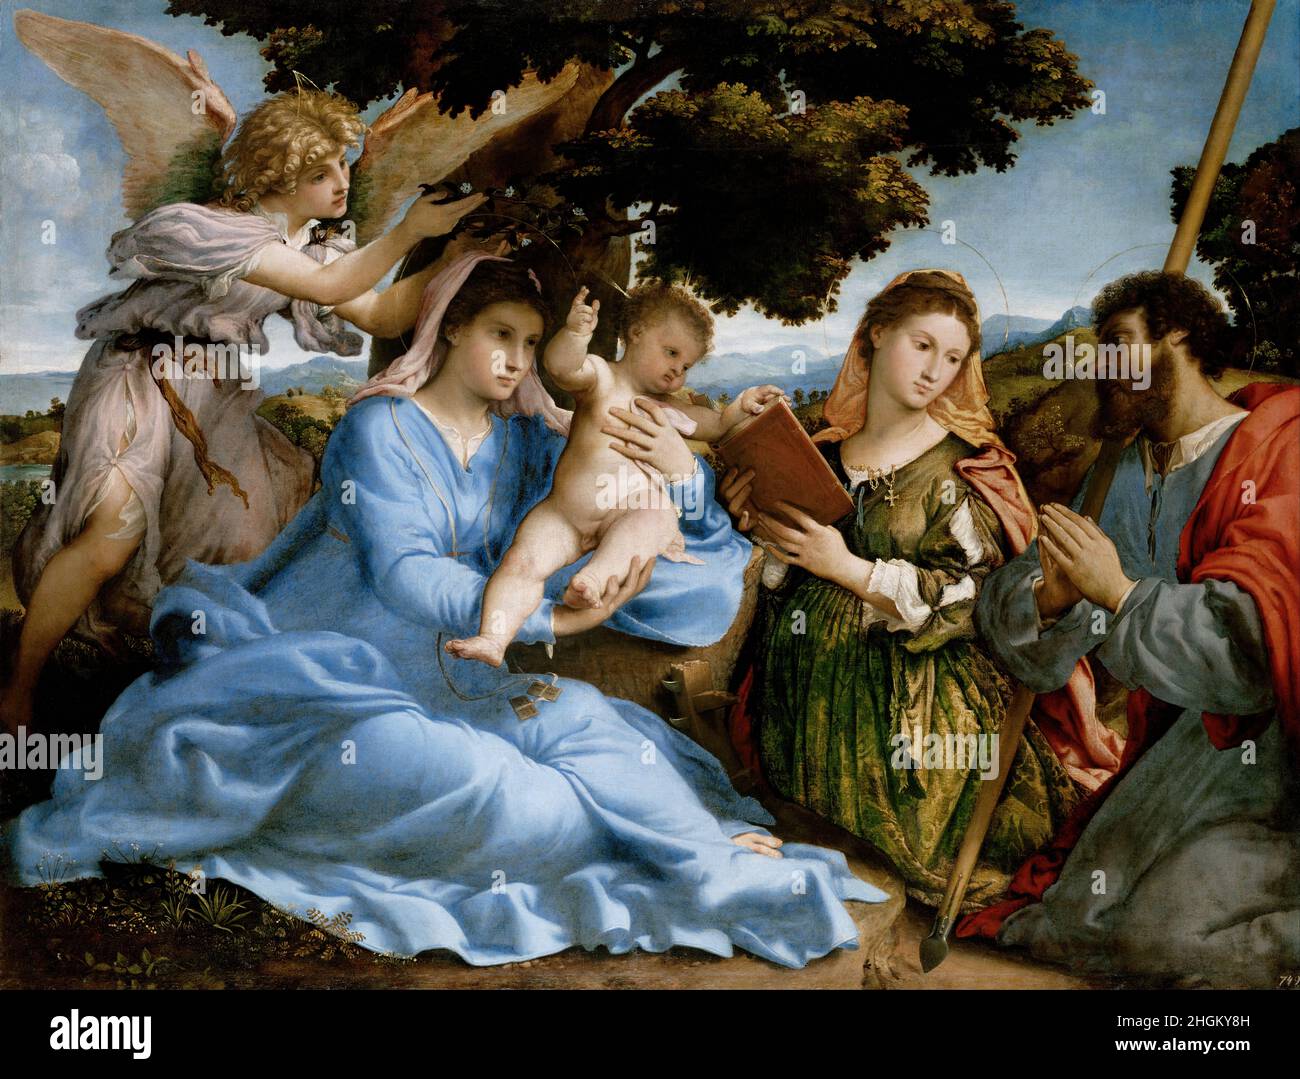 Madonna and Child with Saints Catherine and Thomas - Sacra conversazione - oil on canvas 152 x 117 cm - Lotto Lorenzo Stock Photo